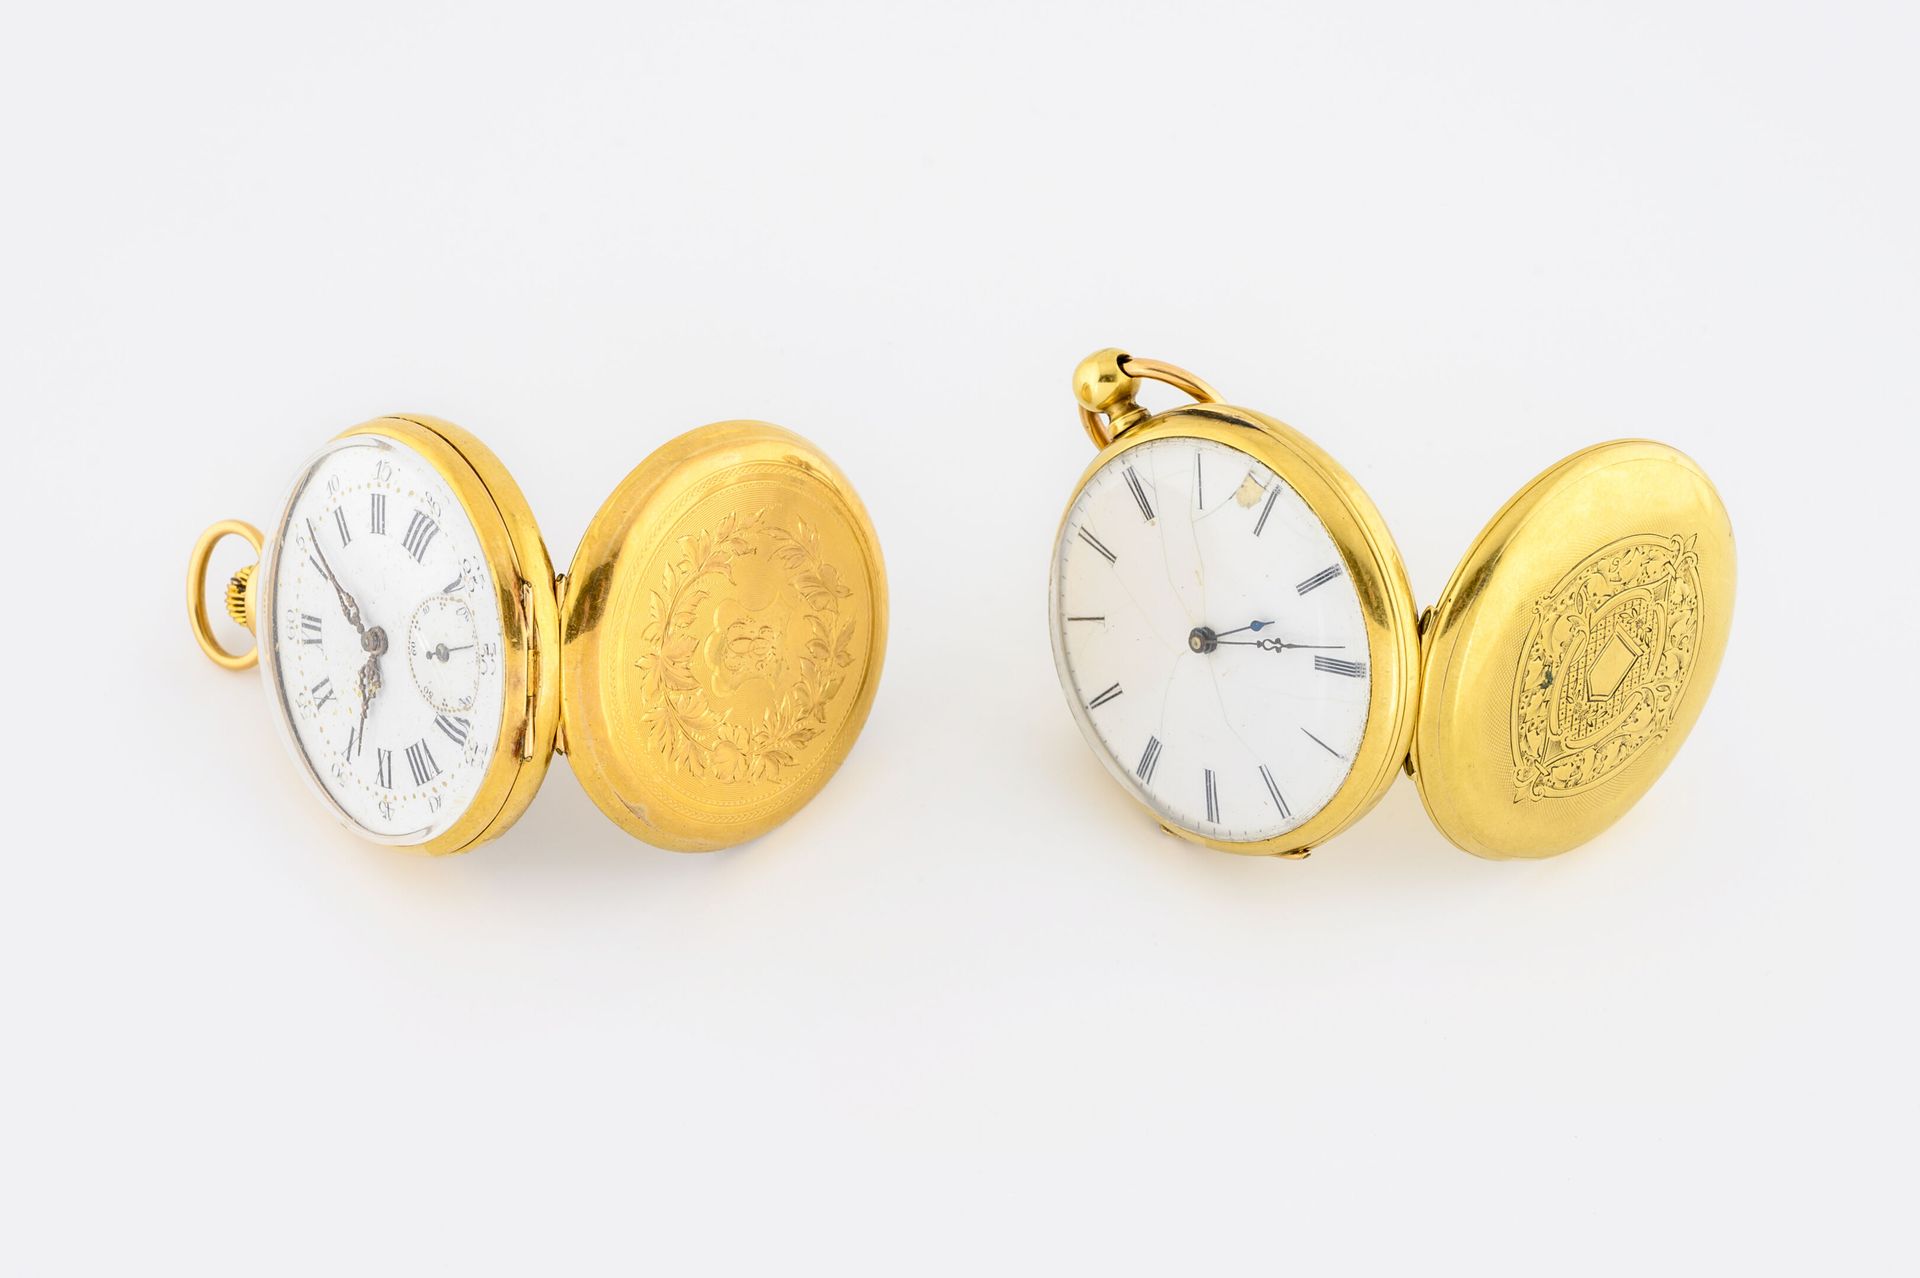 Lot en or jaune (750) comprenant : - Reloj de bolsillo de oro amarillo (750).

C&hellip;